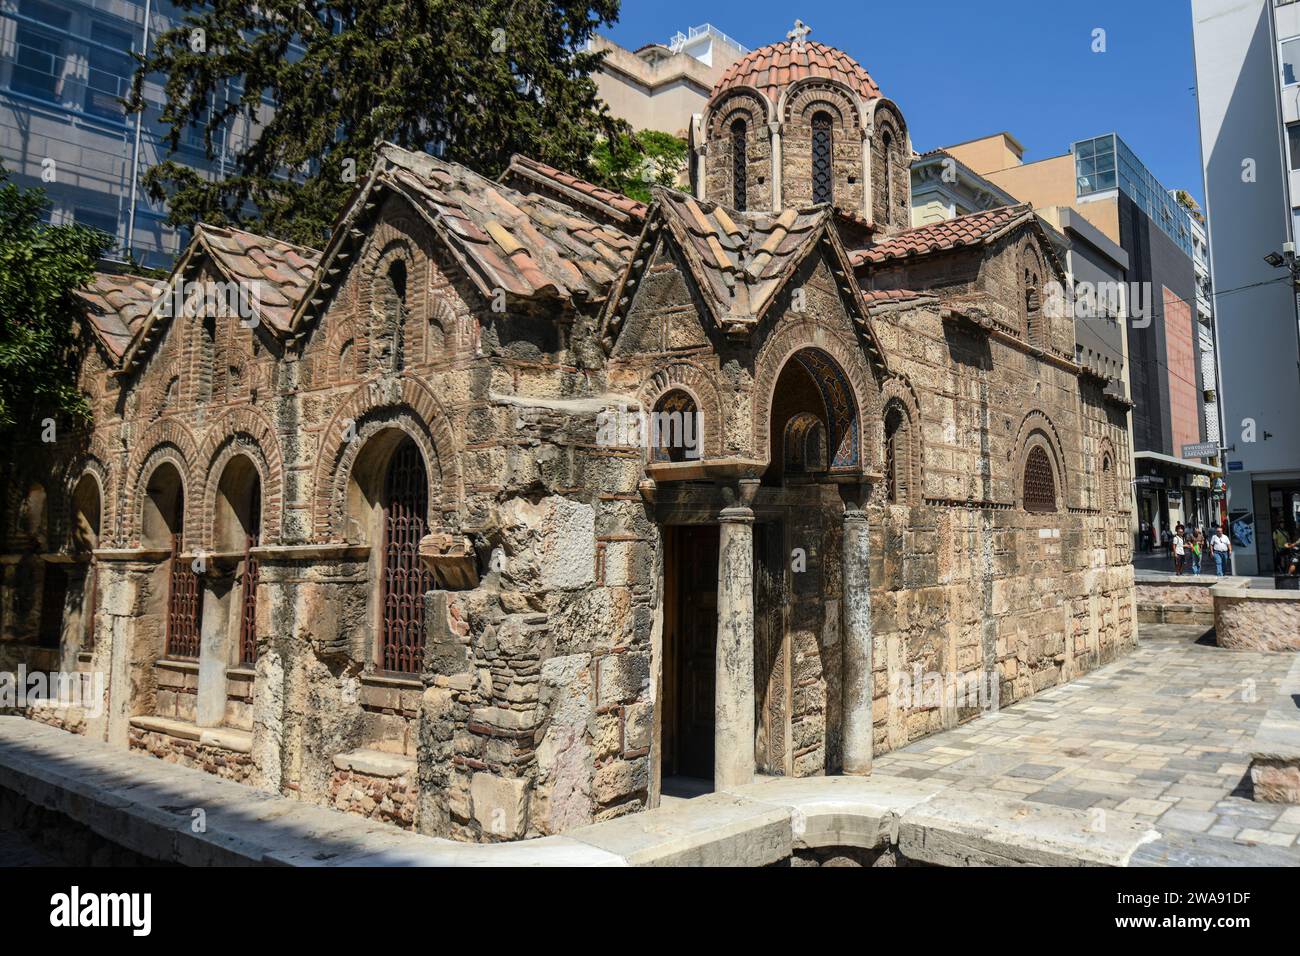 Athens: Holy University Church of the Presentation of the Virgin Mary - Panagia Kapnikarea. Greece. Stock Photo